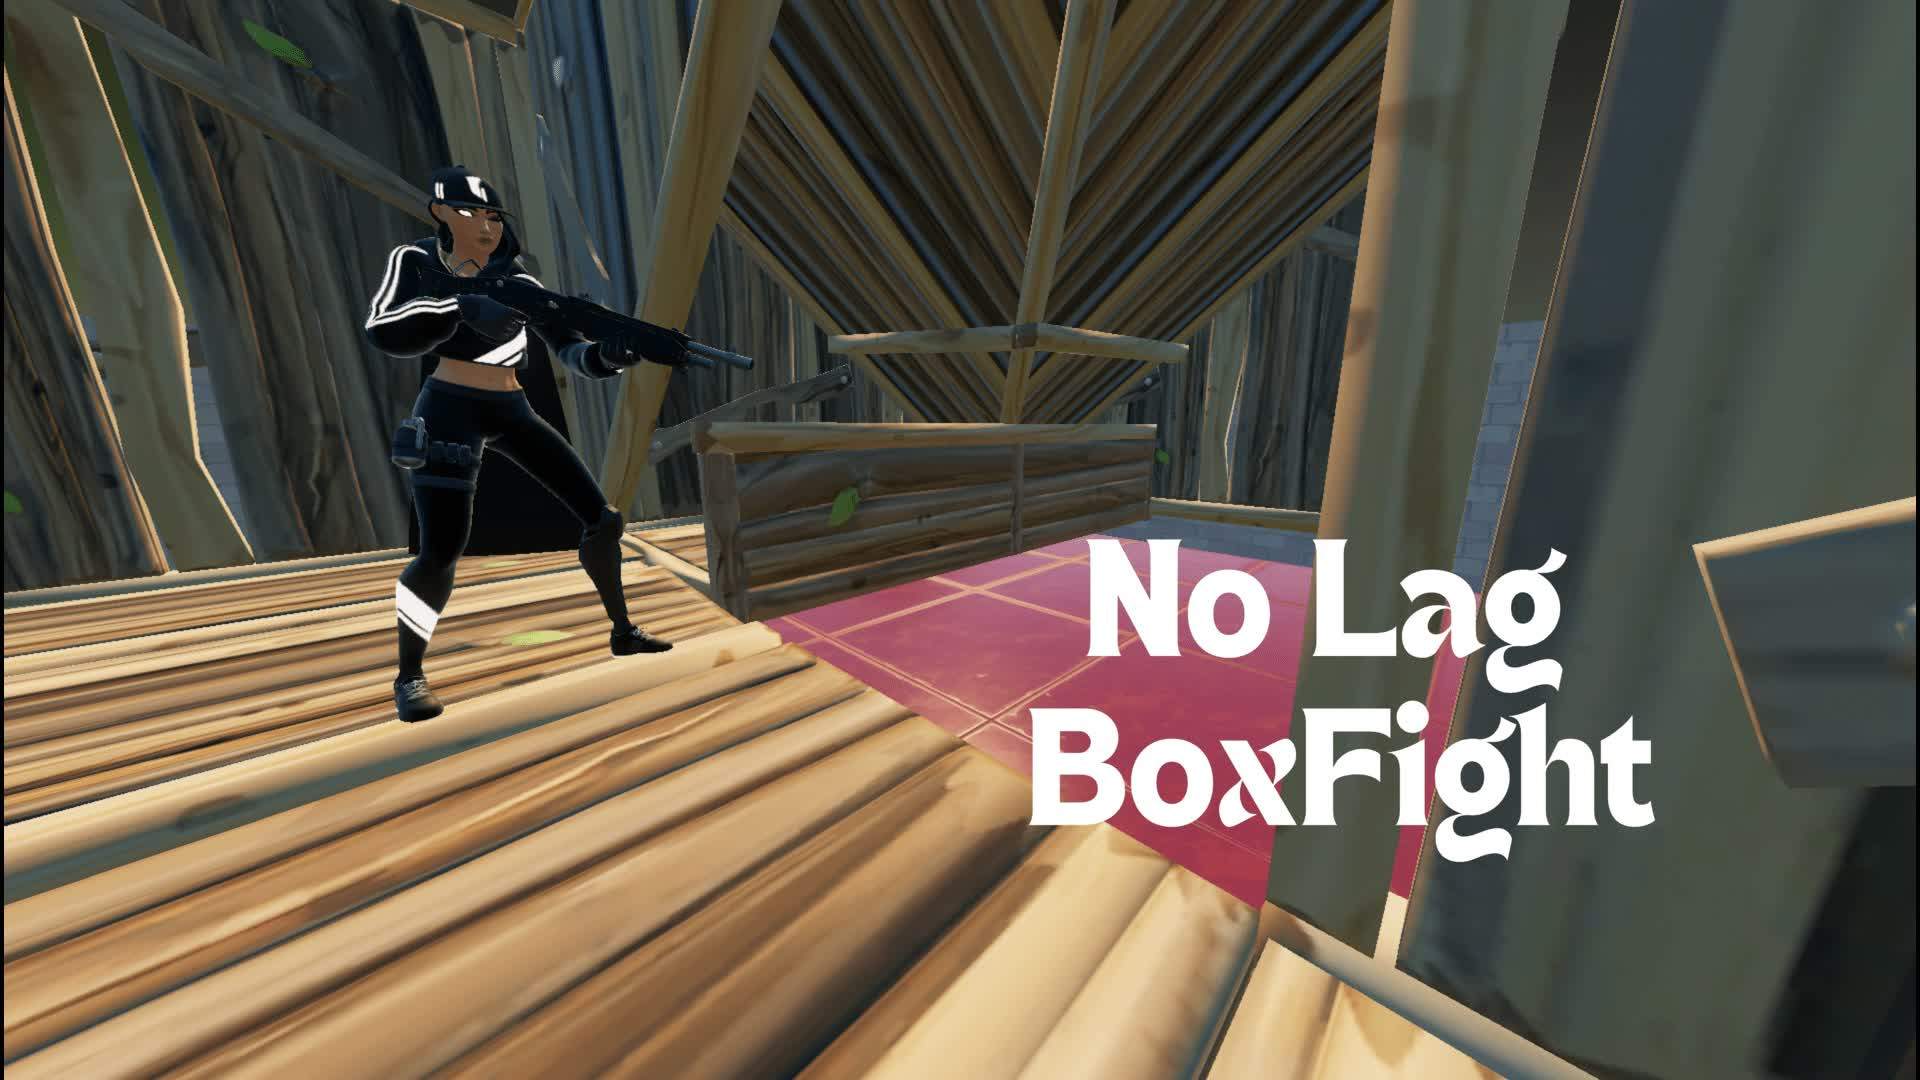 No Lag BoxFight